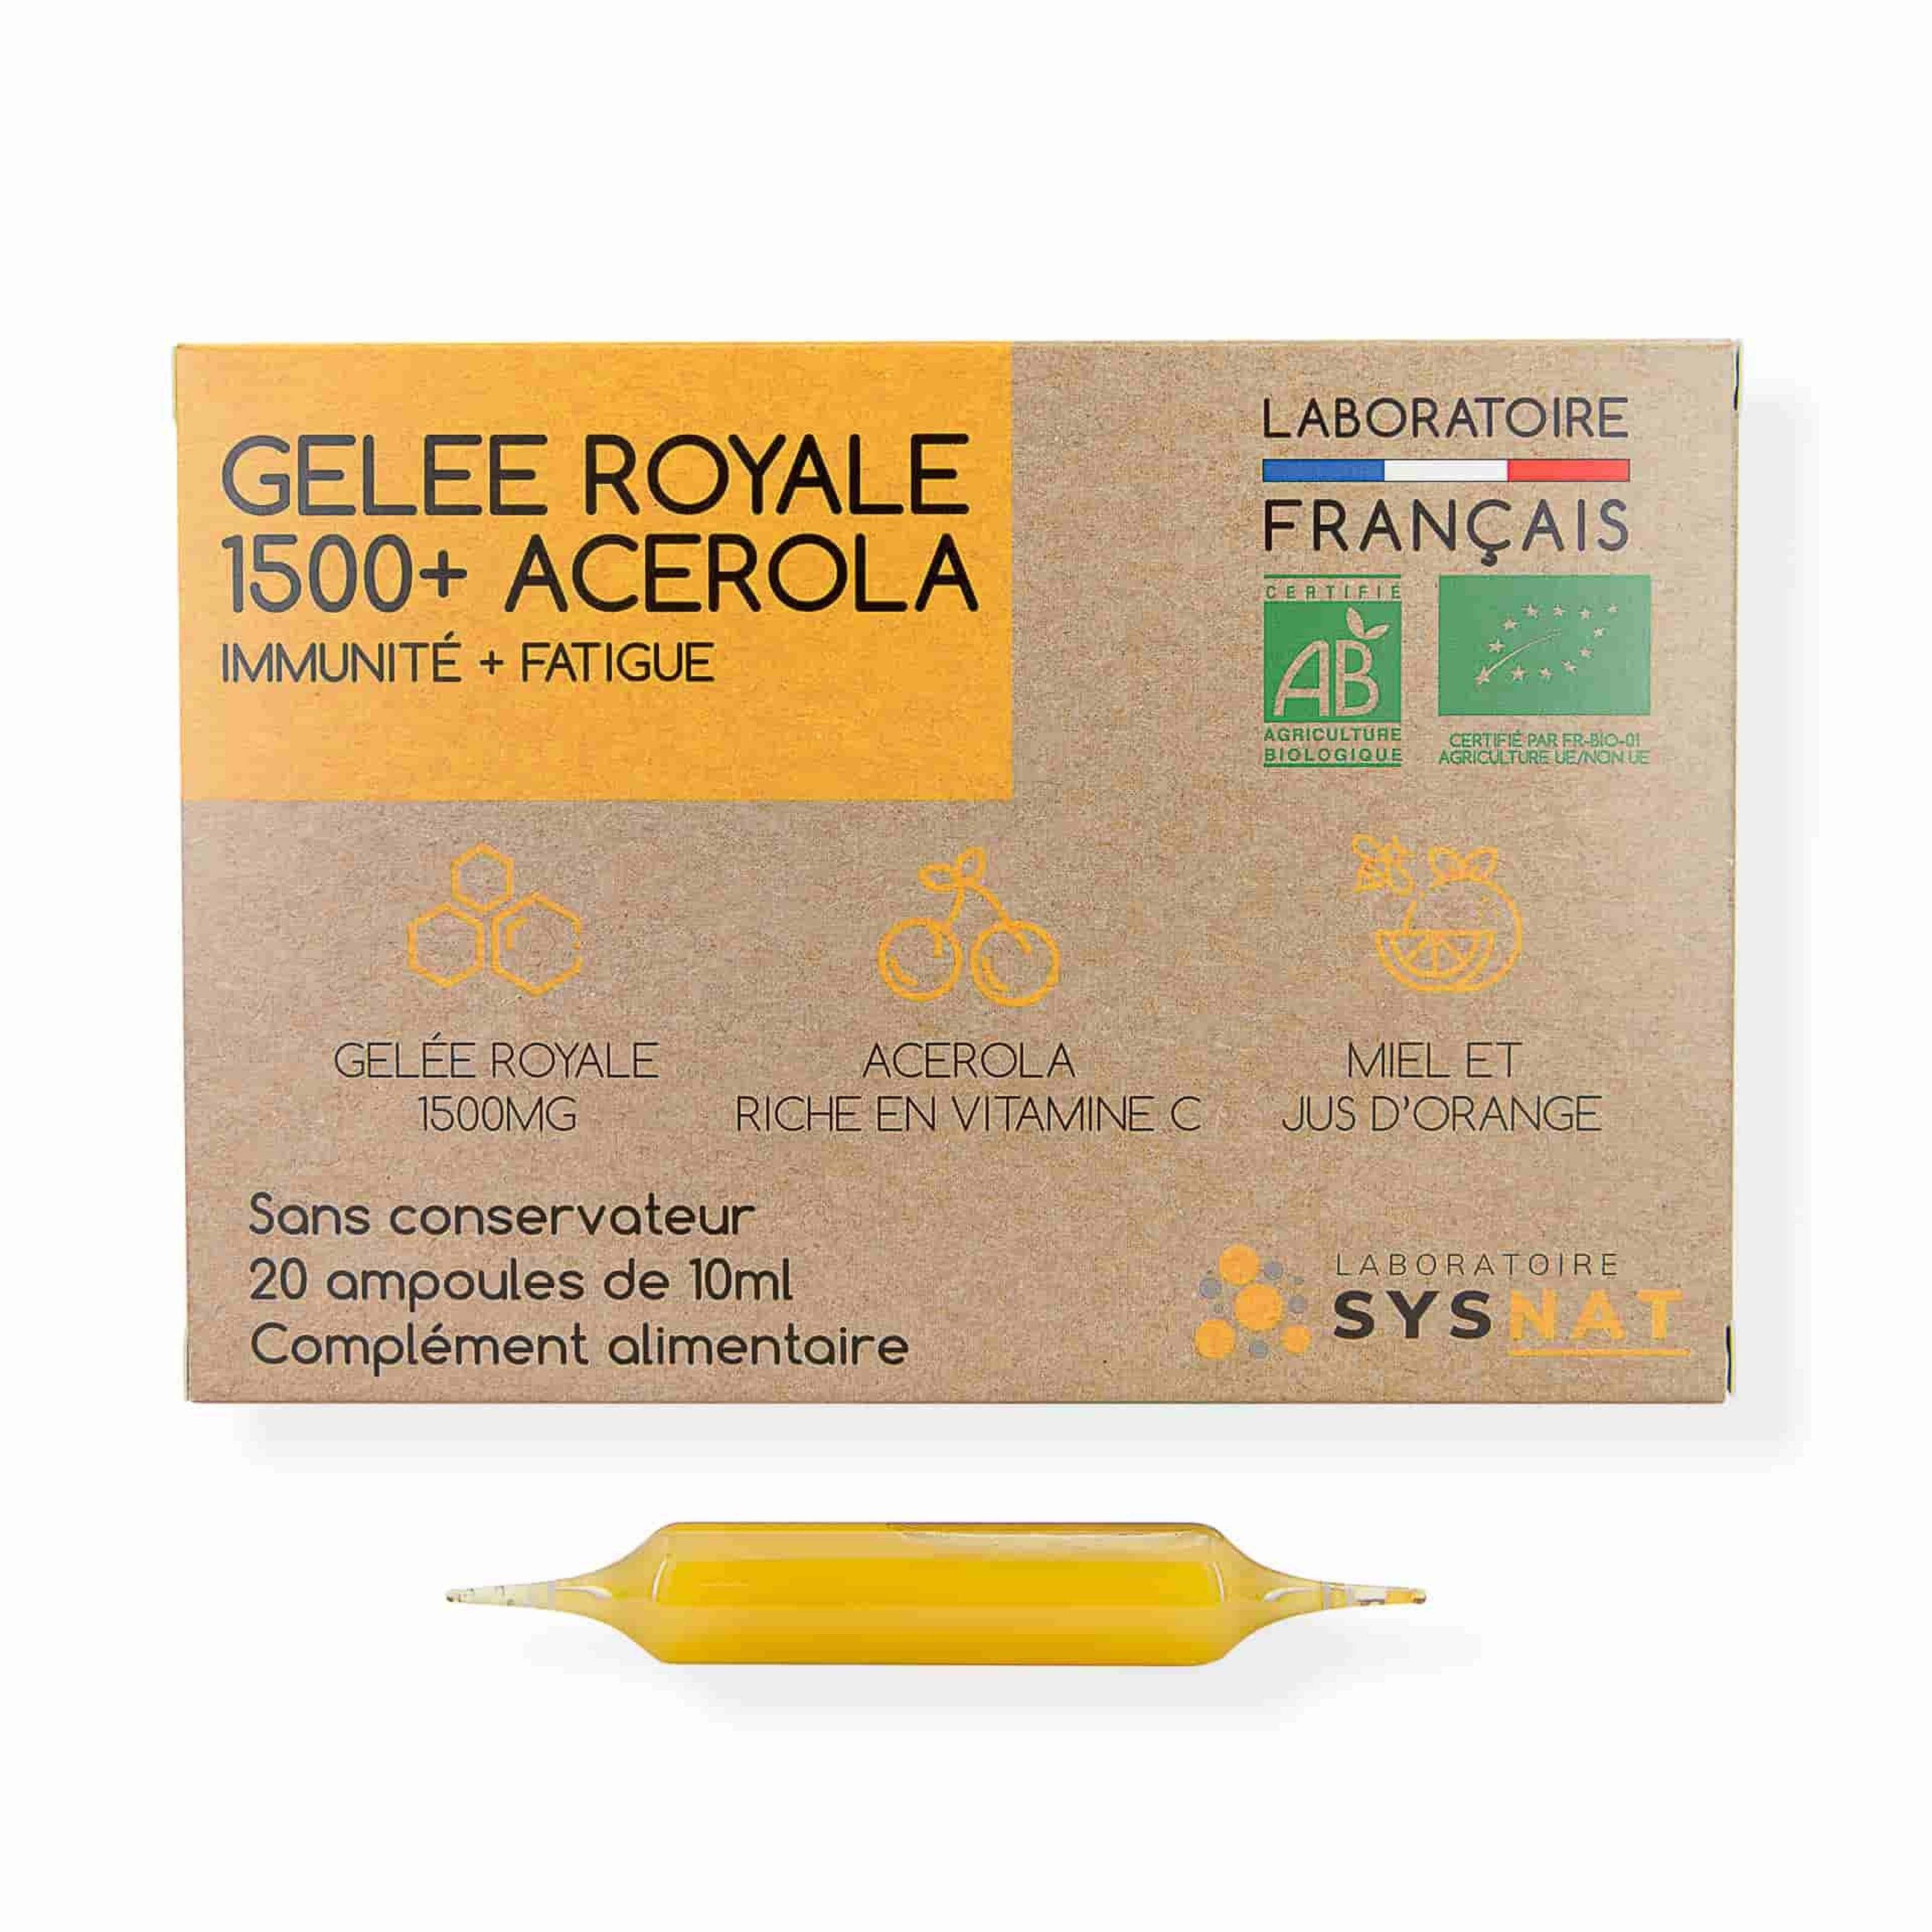 Arkoreal Fresh Royal Jelly Vitaminized 20 Ampoules